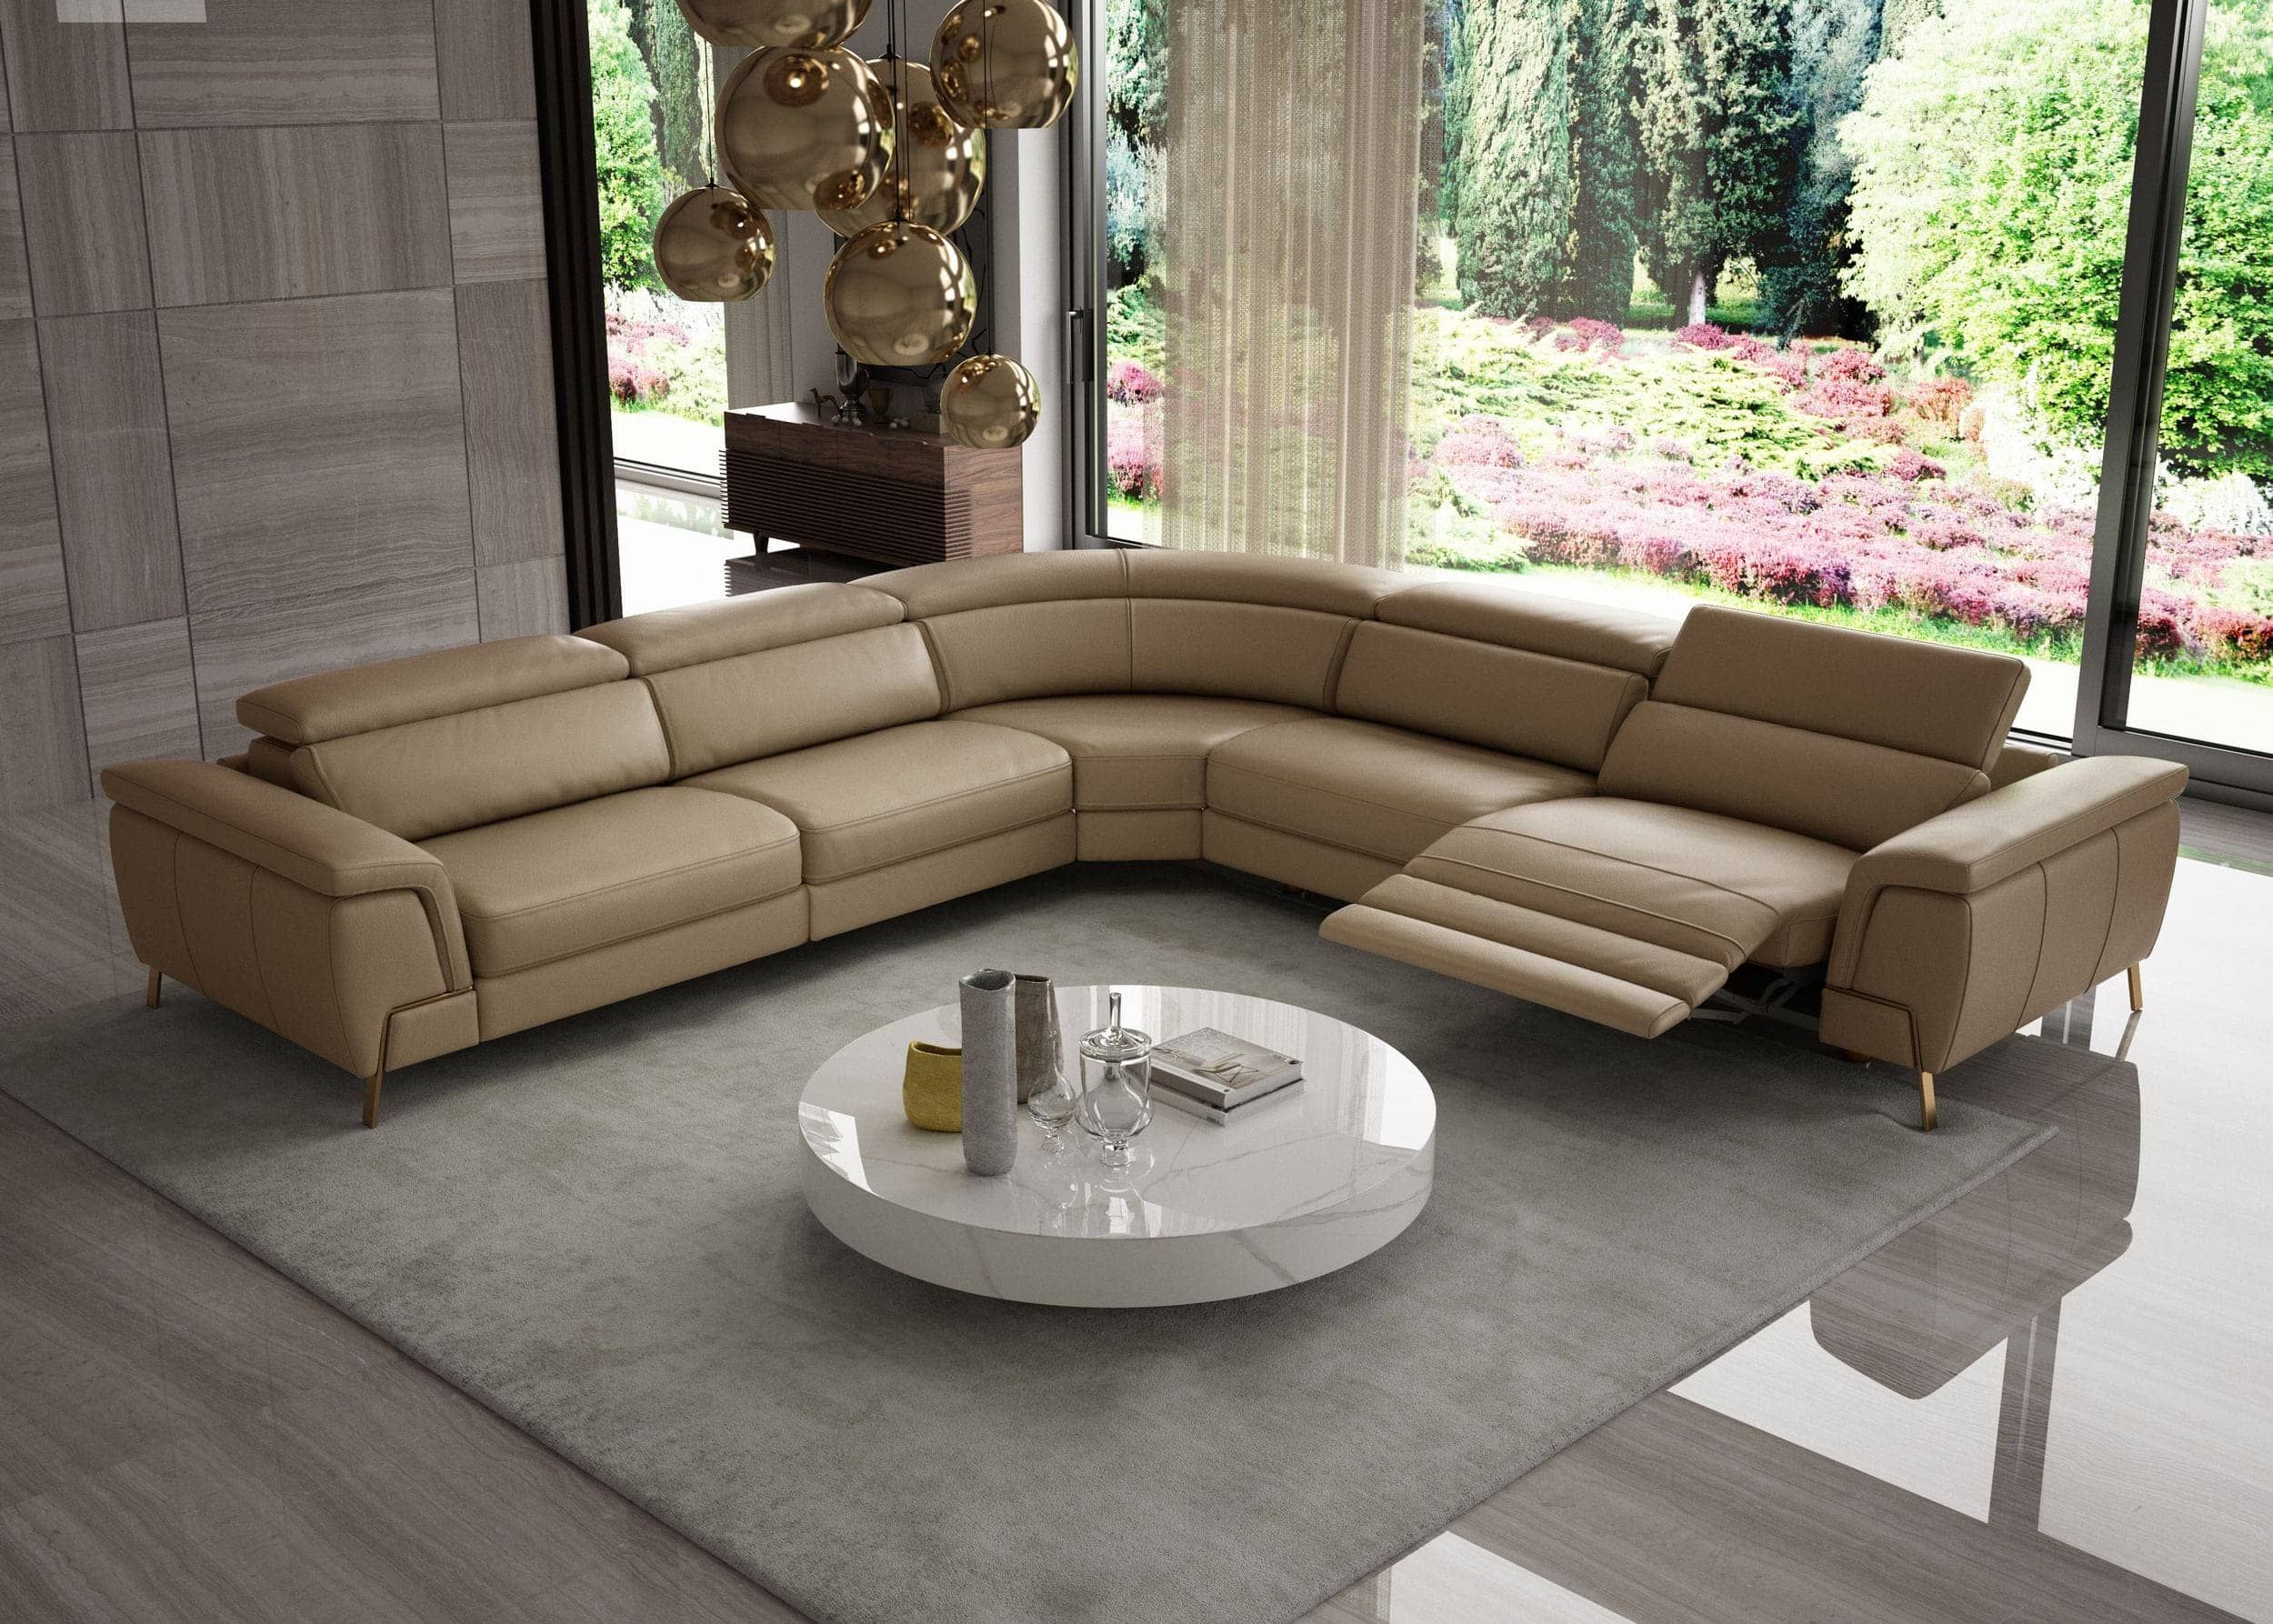 Lamod Italia Wonder - Tan with Recliner Leather Modern Sectional Sofa Italian